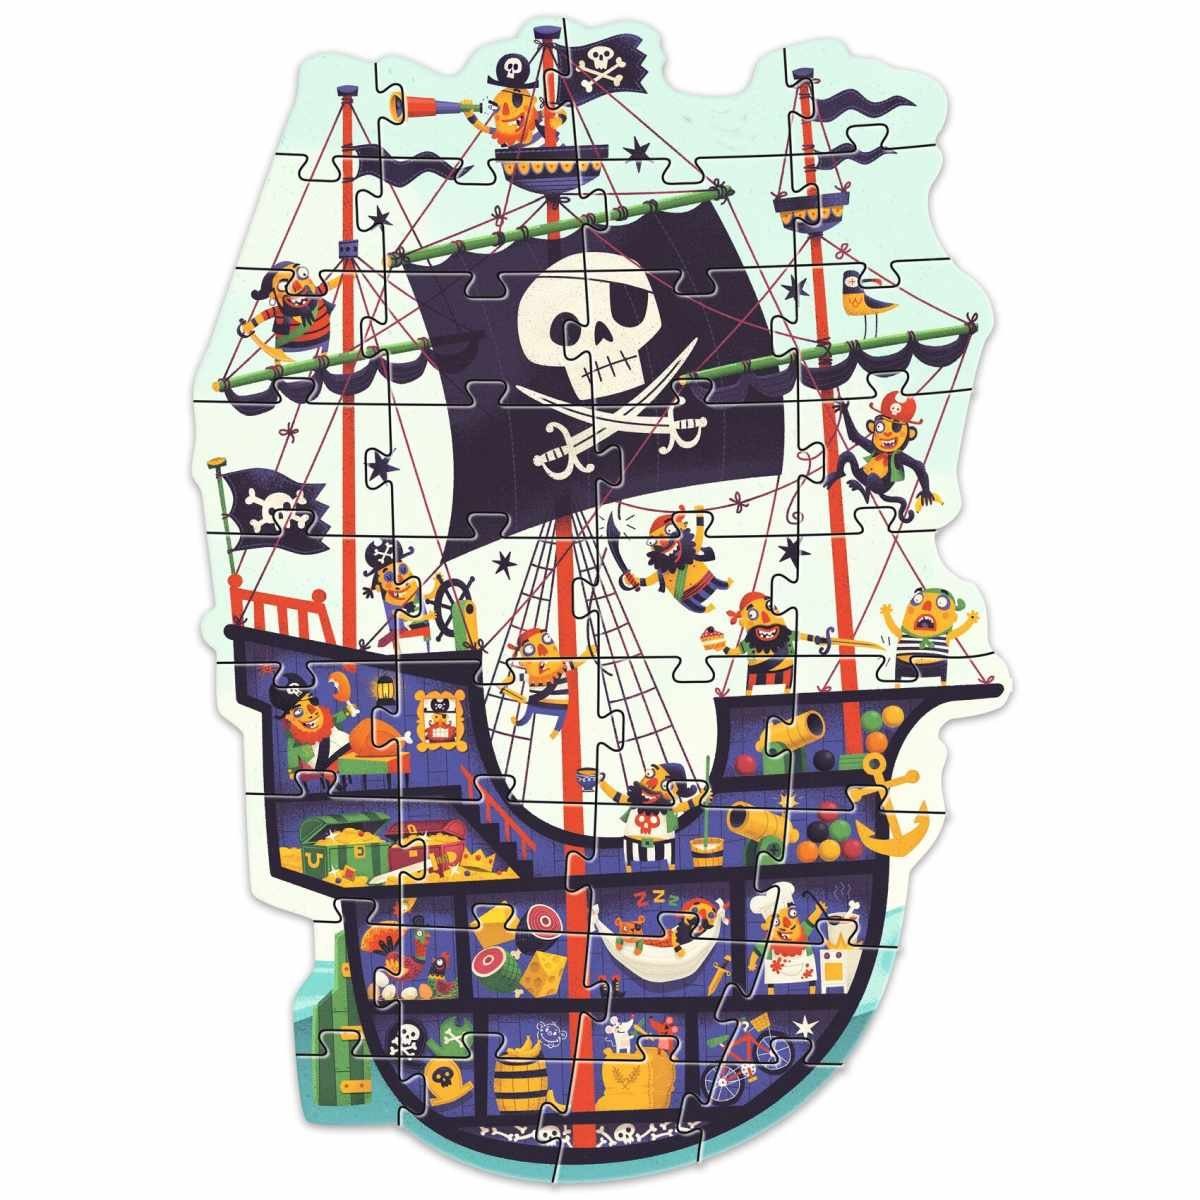 36 90 36 Puzzleteile Konturenpuzzle cm Piratenschiff Das DJECO lang, Teile Puzzle: